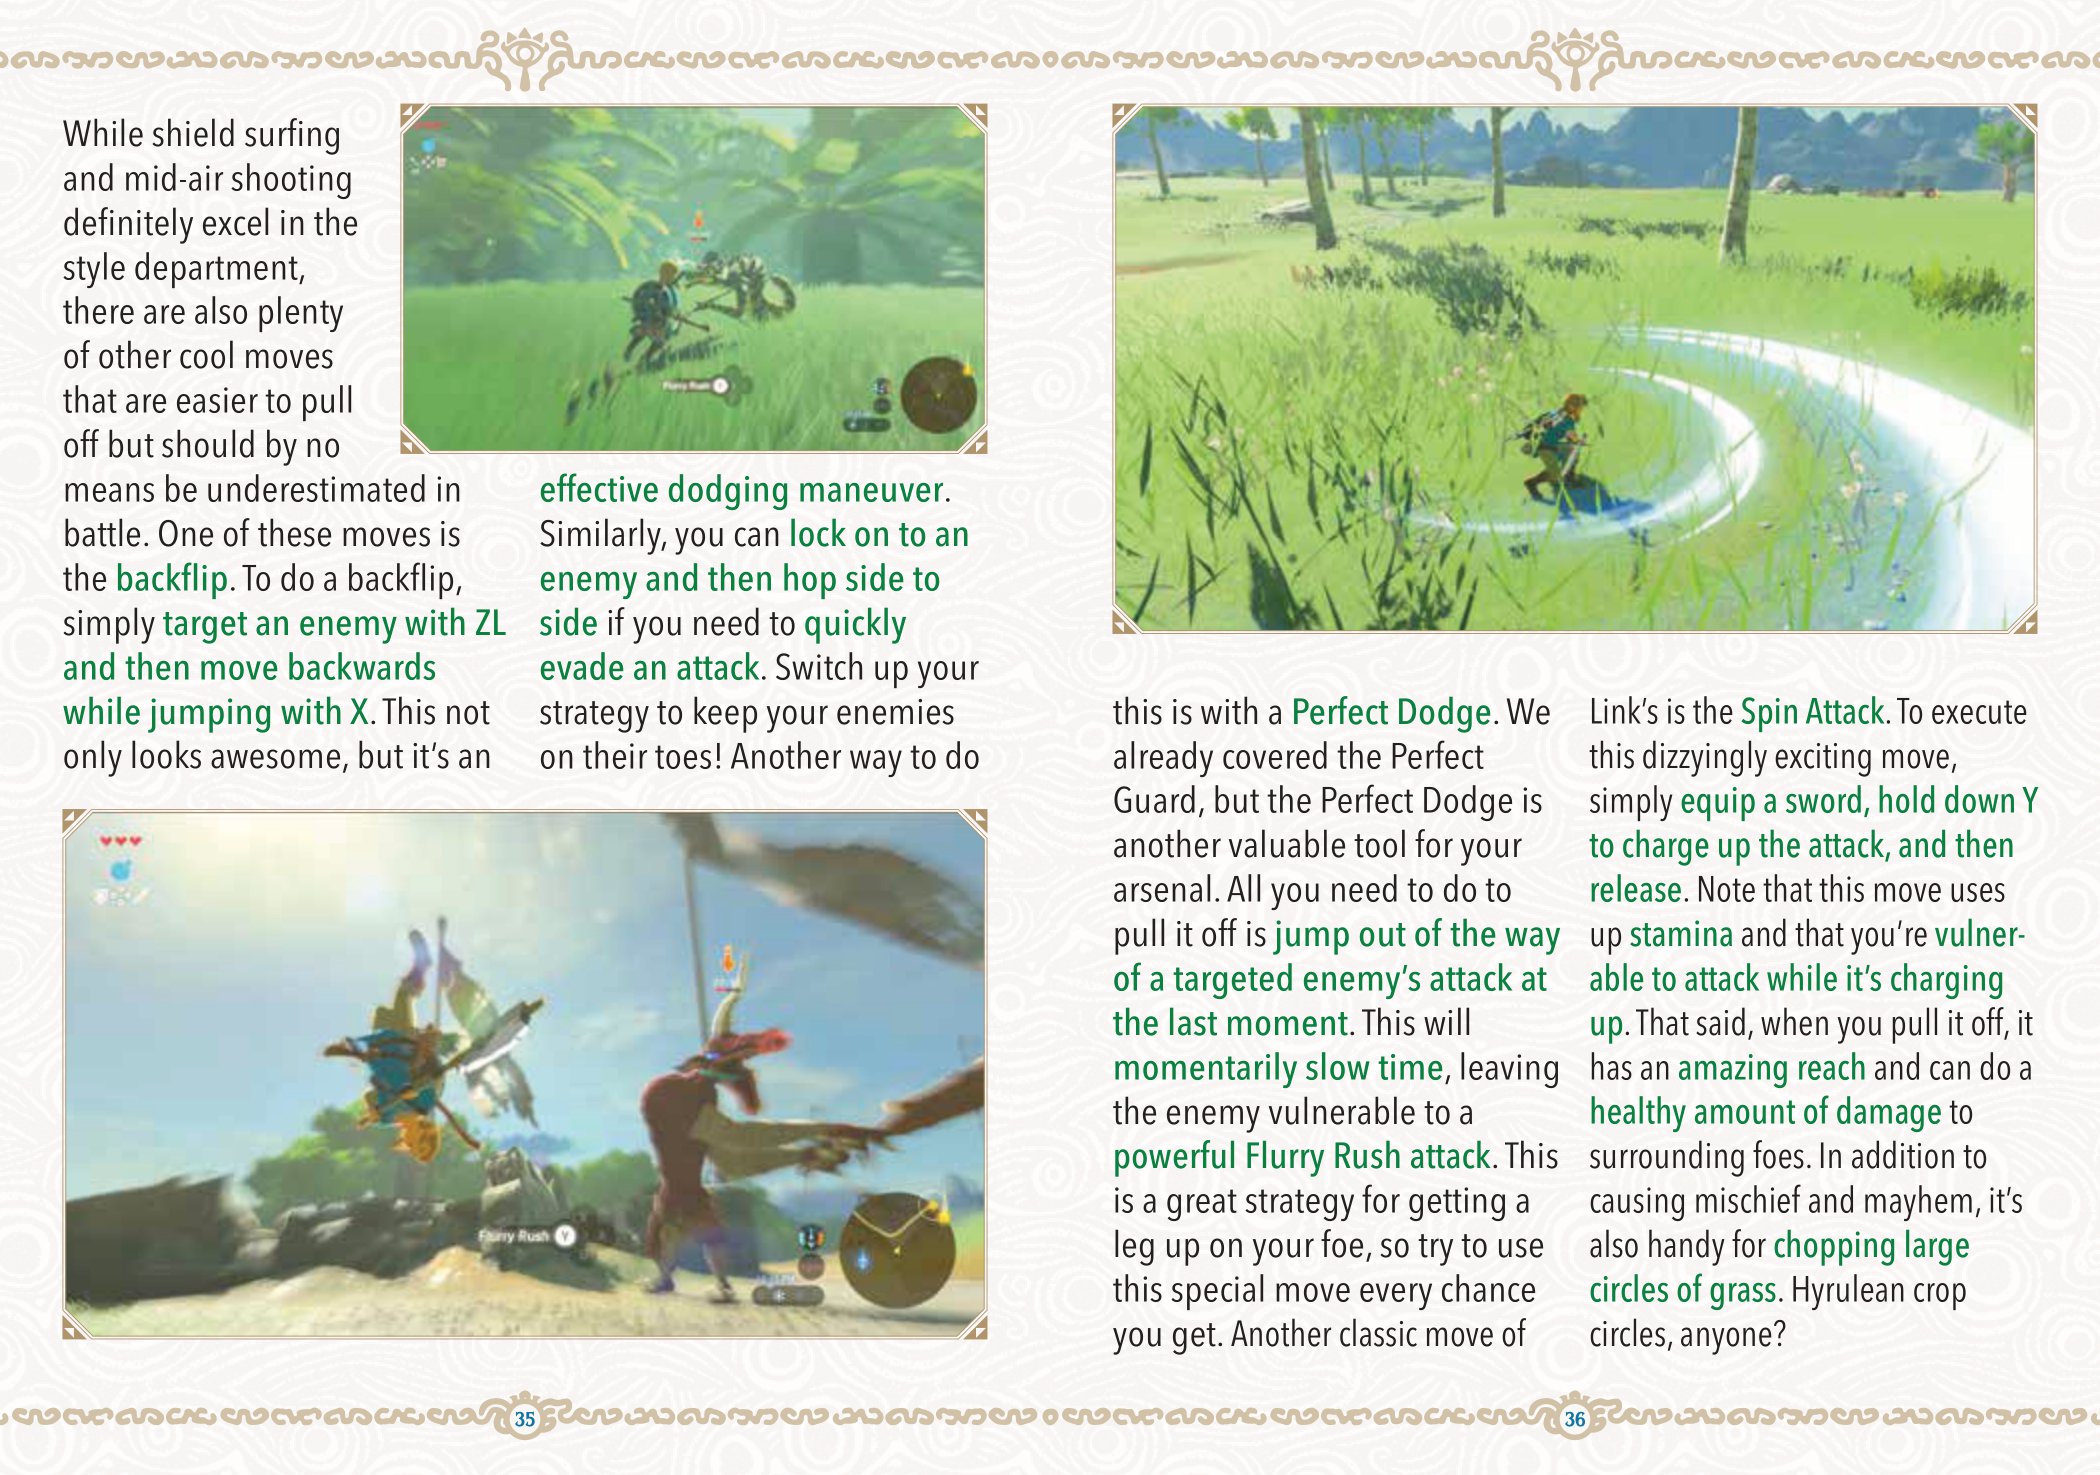 The Legend of Zelda: Breath of the Wild Walkthrough & Guides Wiki